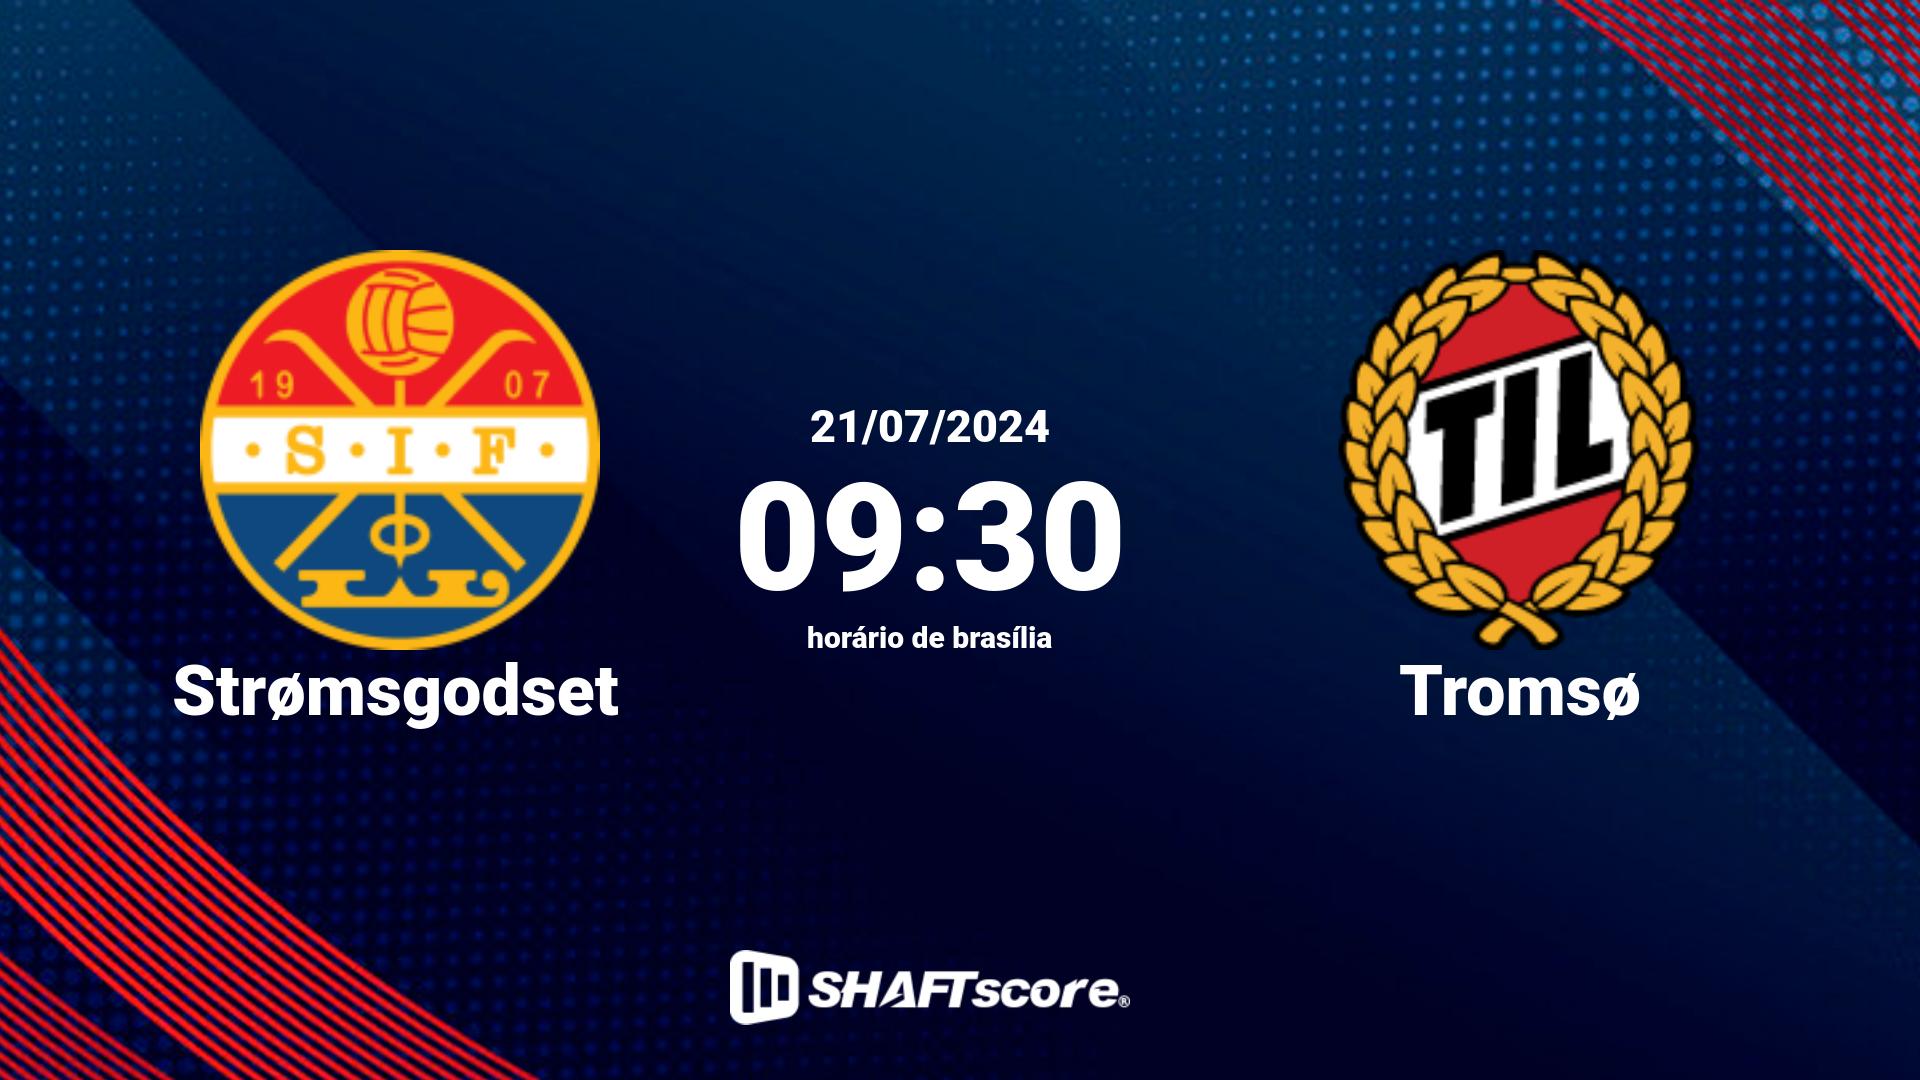 Estatísticas do jogo Strømsgodset vs Tromsø 21.07 09:30